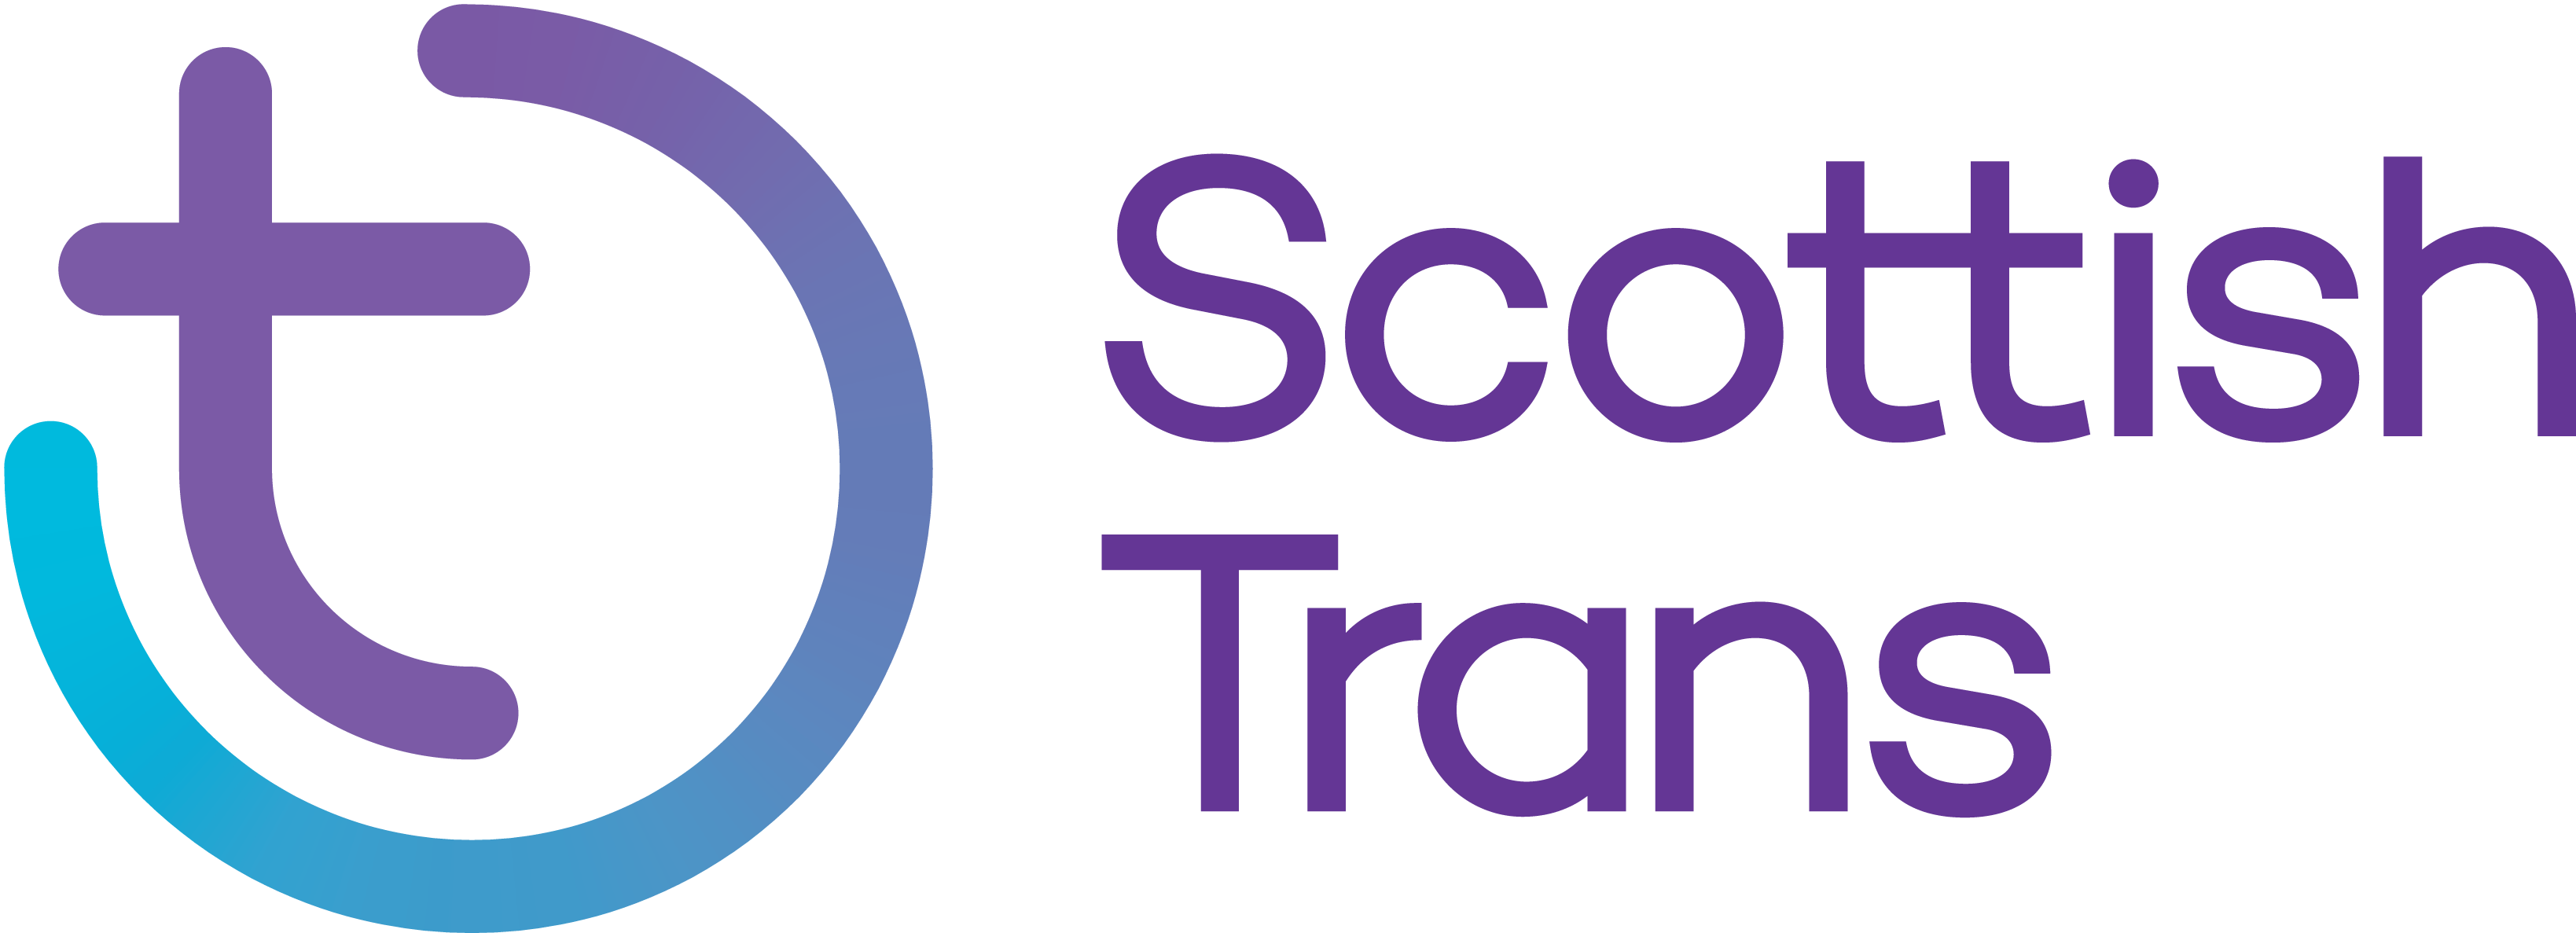 Scottish Logo - Our logo and brand identity